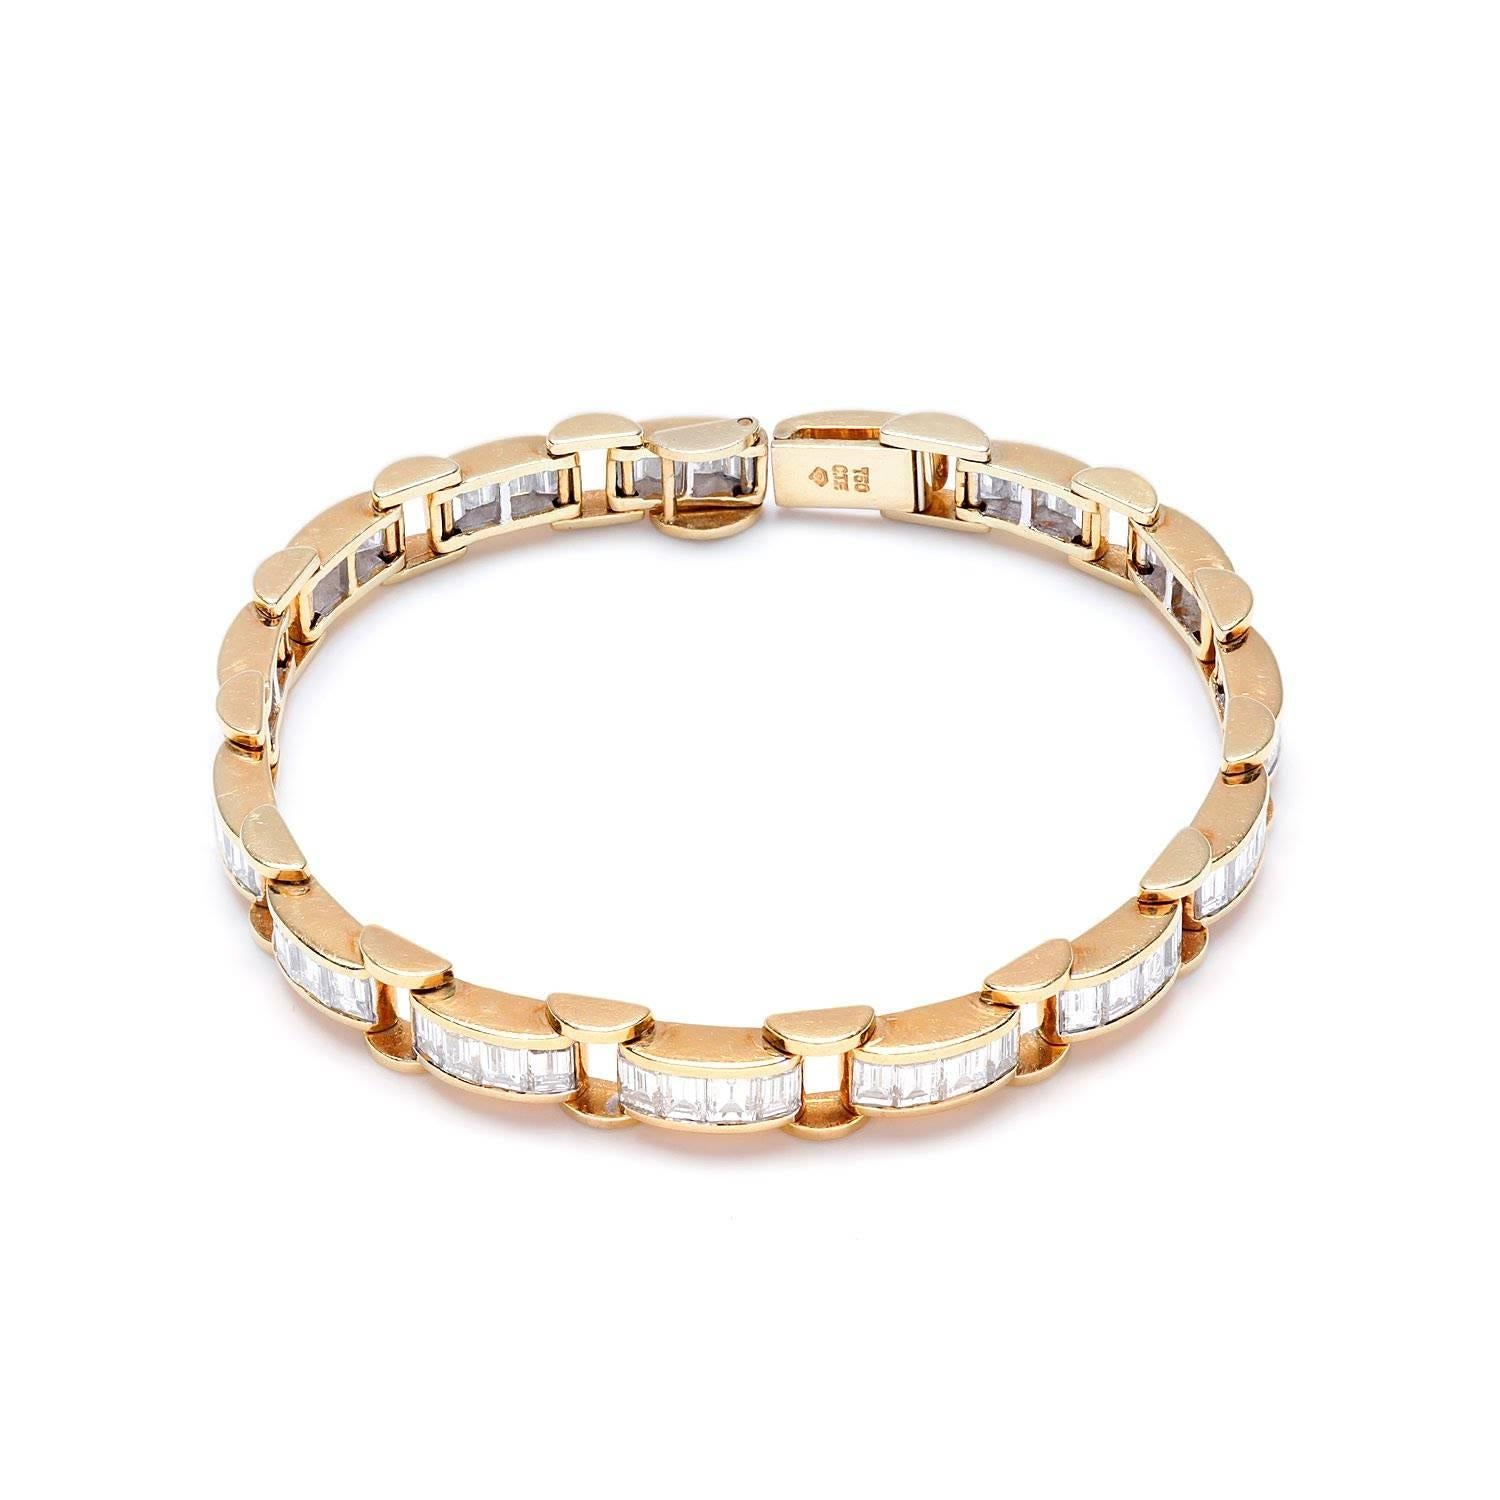 6.85 Carat & 18K Gold, GIA Certified Diamond Bracelet in a Chain Link Style 3